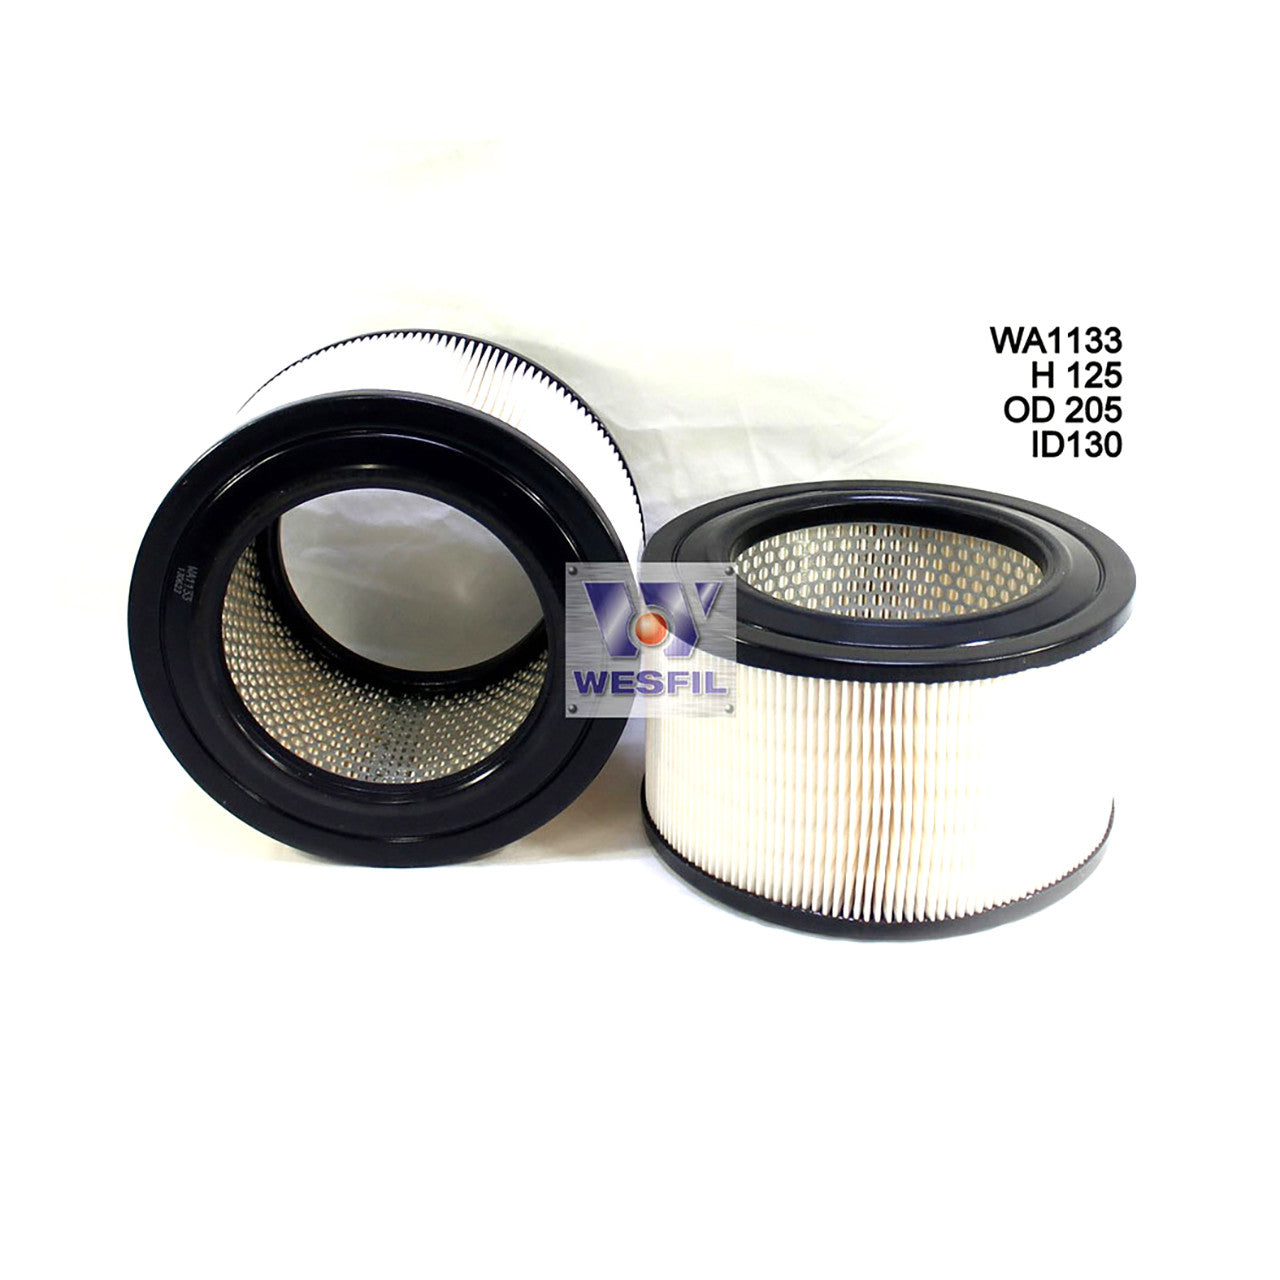 WA1133 Wesfil Air Filter for A1510 KIA (Cross Ref: A1510)